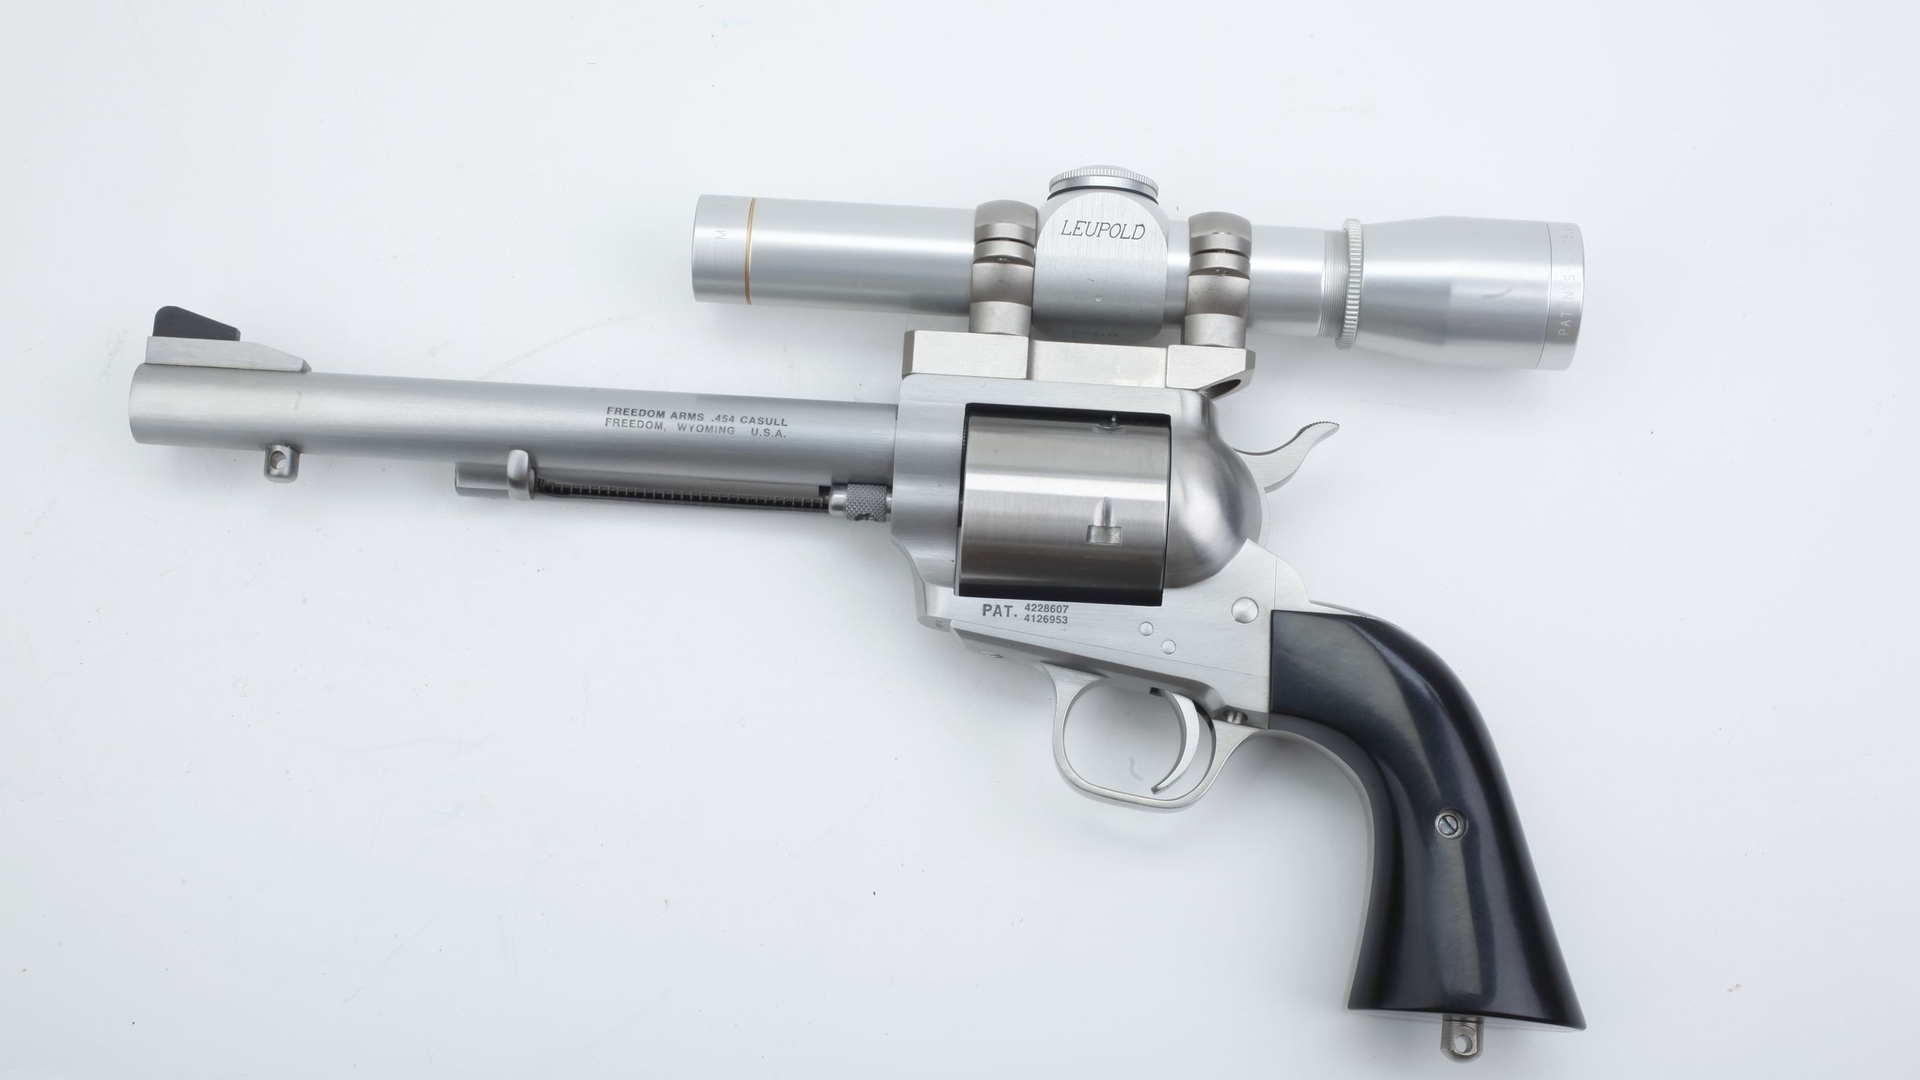 Handy-Wallpaper Freedom Arms 454 Casull Revolver, Waffen kostenlos herunterladen.